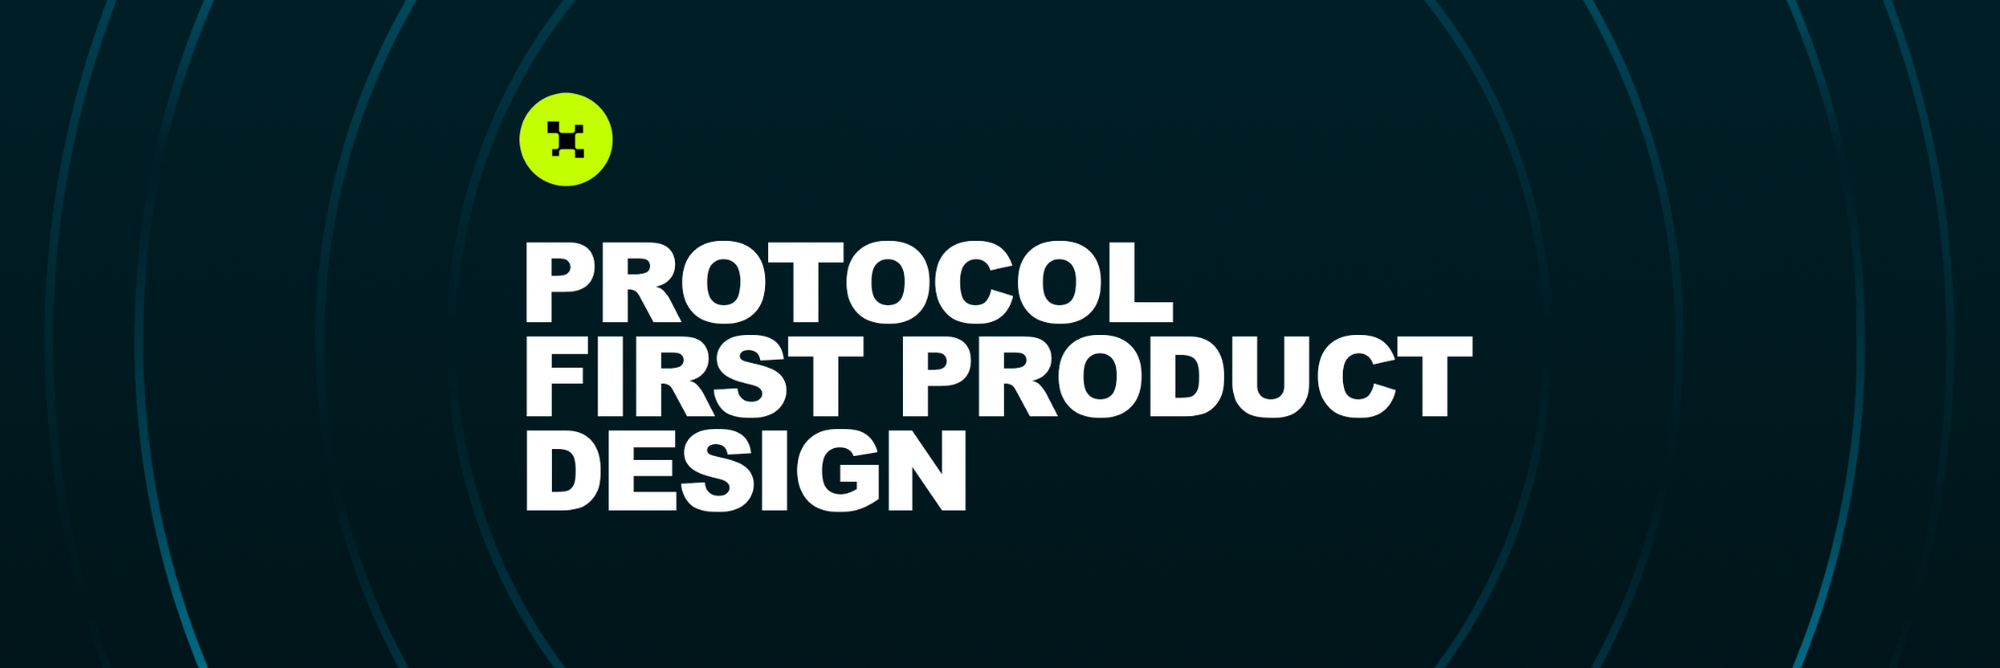 Product vs Protocol